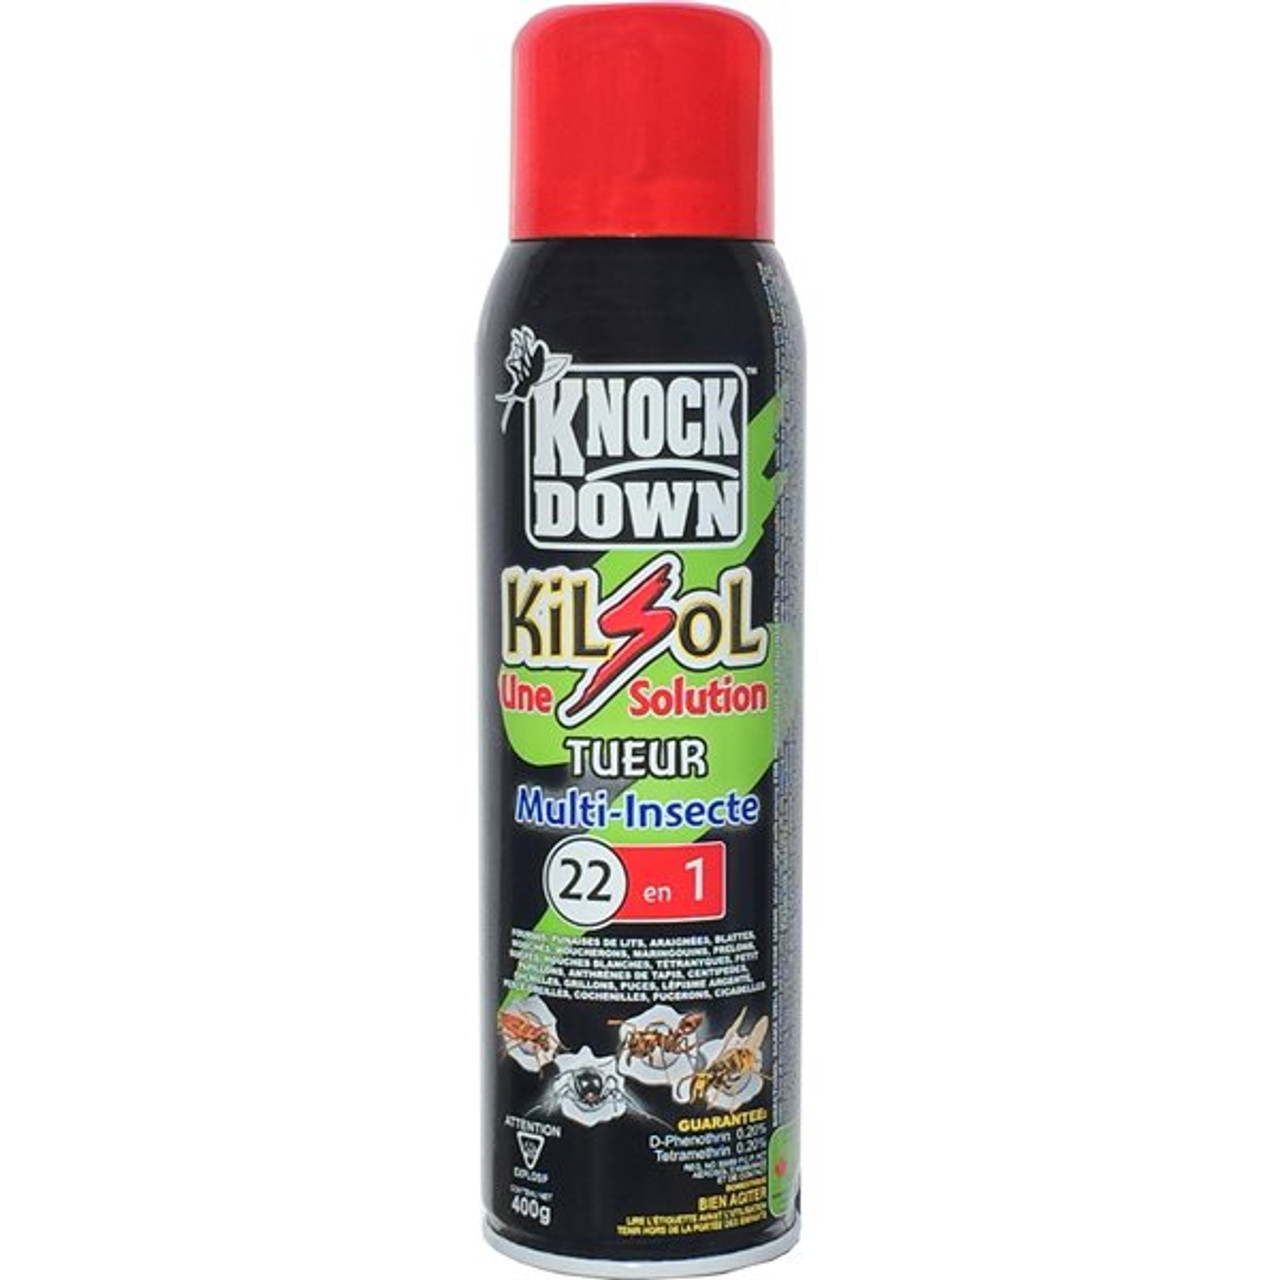 Knock Down Kilsol - One Solution Multi-Insect Killer - 0.2% D-Phenothrin & 0.2% Tetramethrin 400g Aerosol